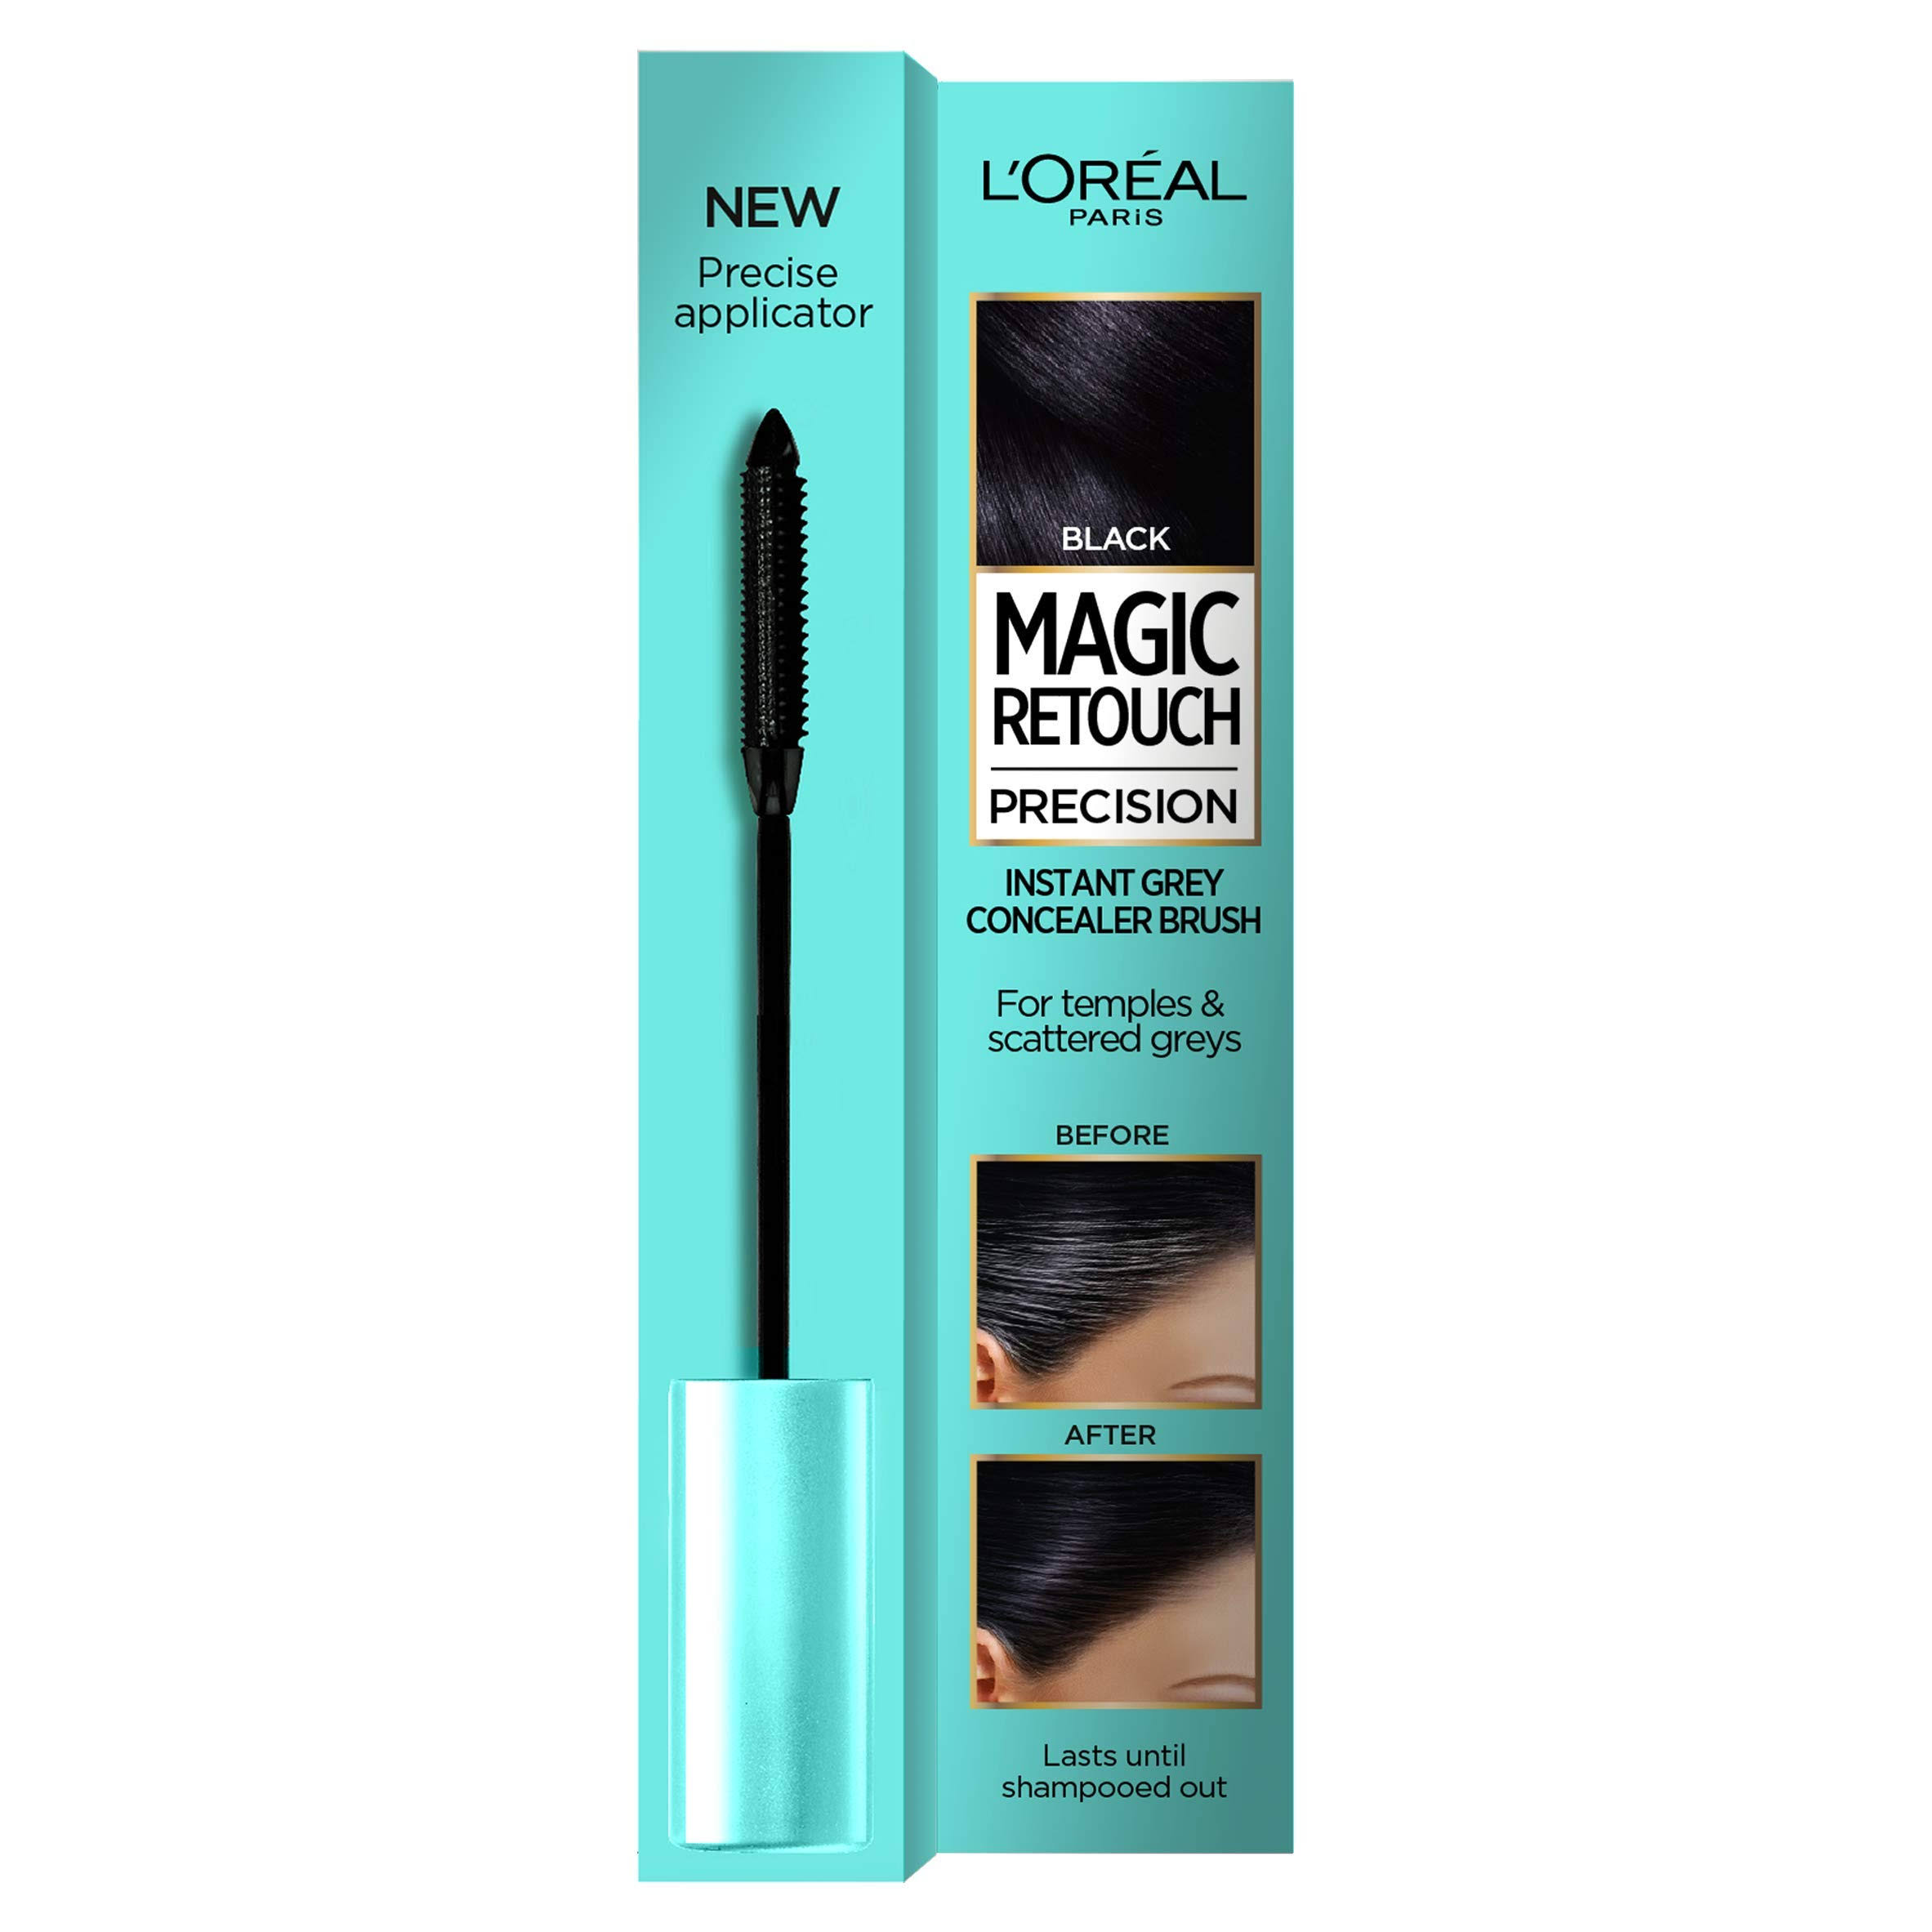 L'Oreal Magic Retouch Precision Instant Grey Concealer Brush - Black